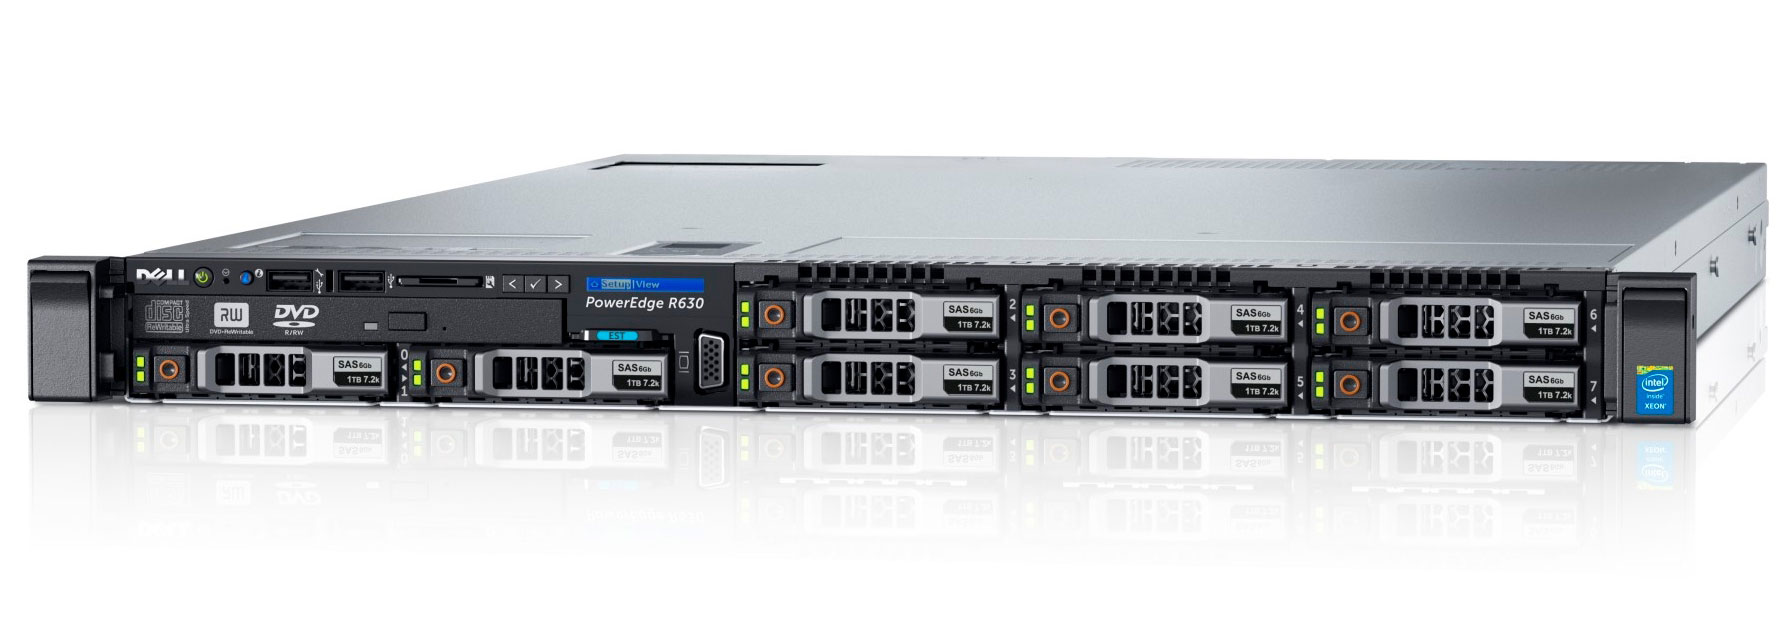 Подробное фото Сервер DELL PowerEdge R630 2x Xeon E5-2690v3 192Gb 2133P DDR4 8x noHDD 2.5" SAS RAID Perc H730, 1024Mb, DVD, 2*PSU